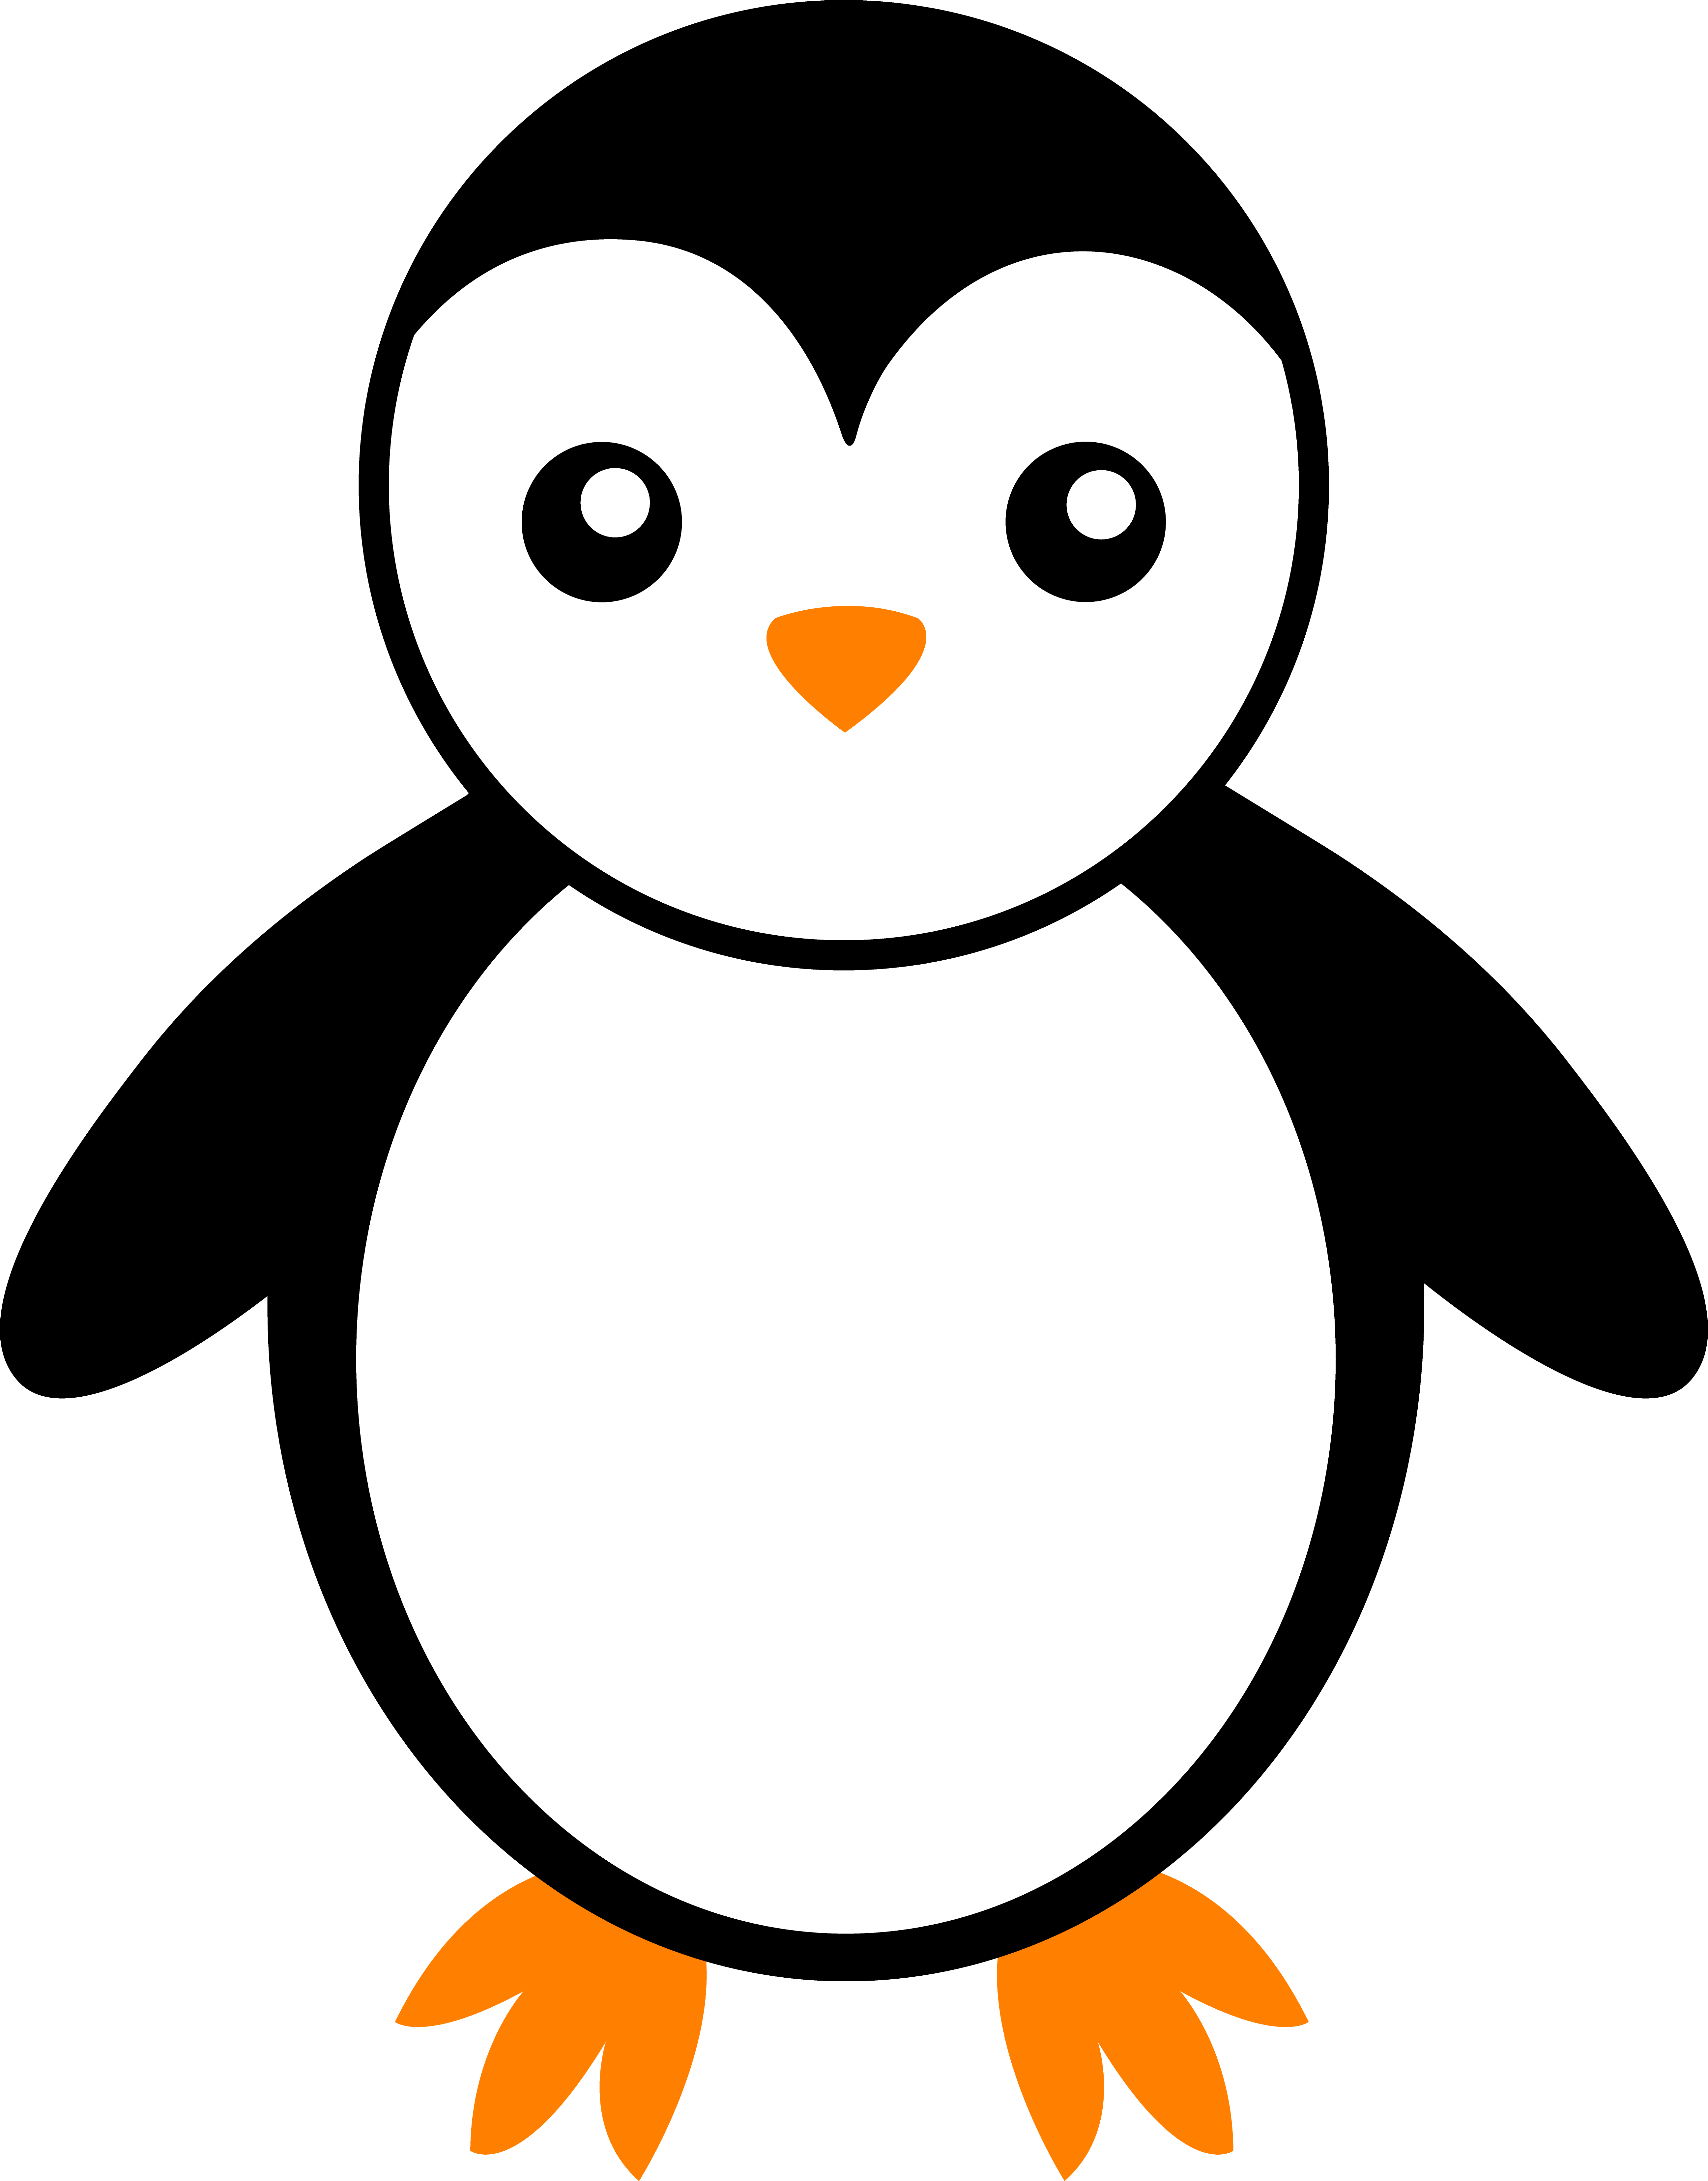 Penguin Cartoon Pictures - Cliparts.co